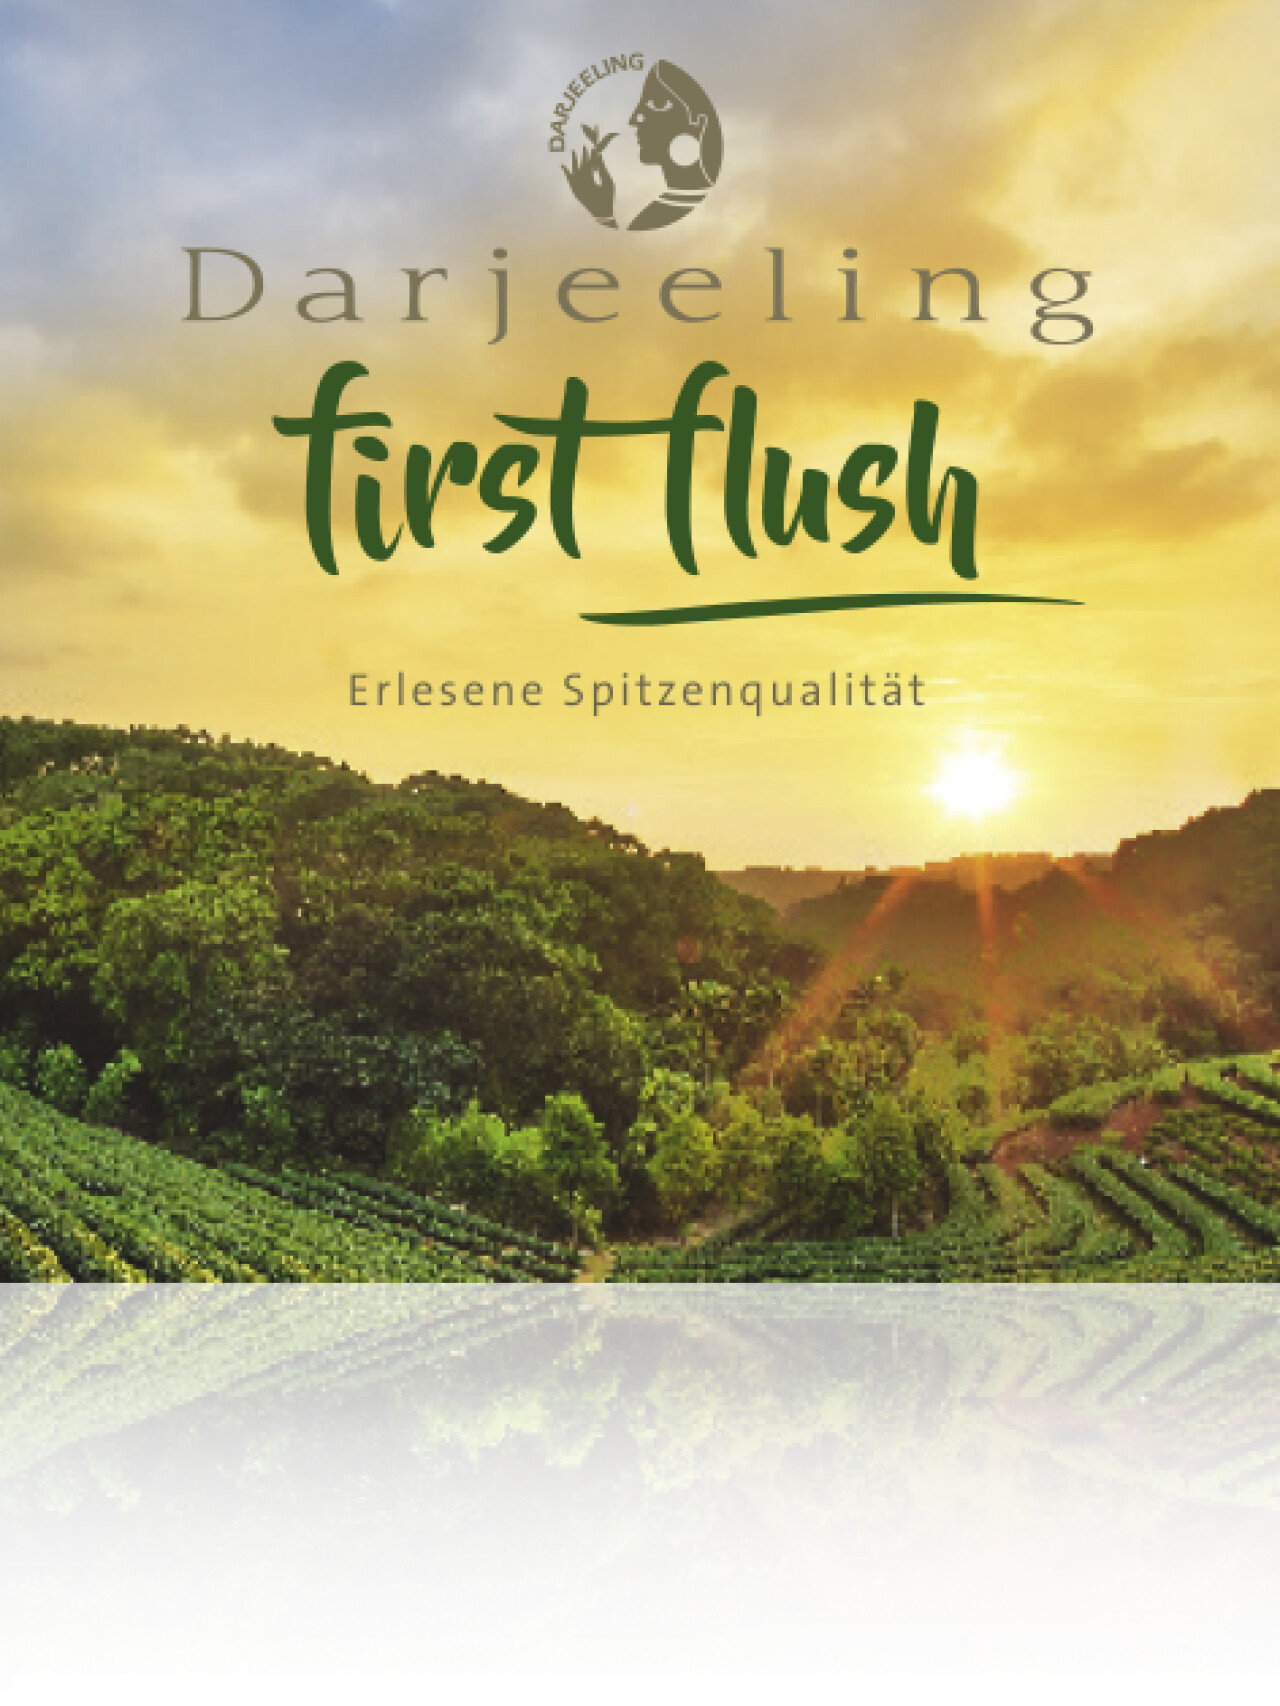 Broschüre "First Flush"